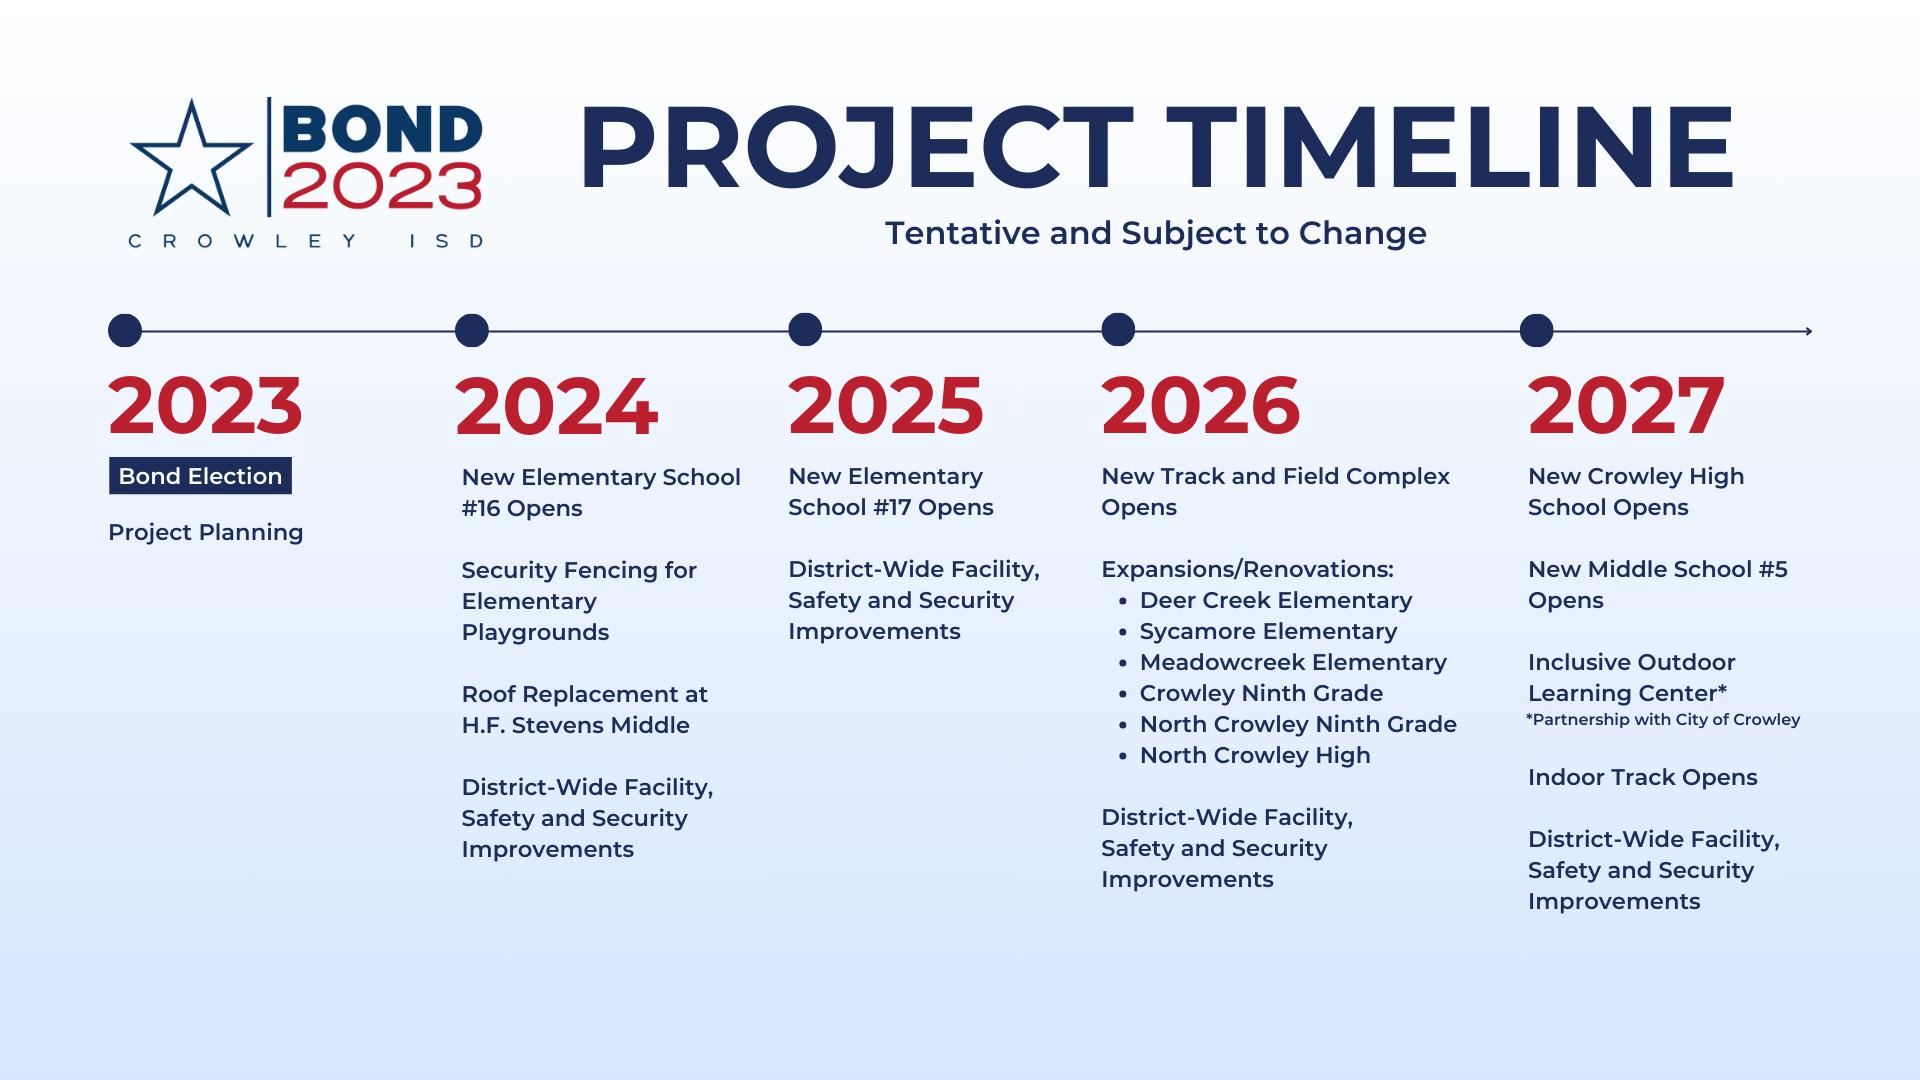 Bond 2023 Project Timeline